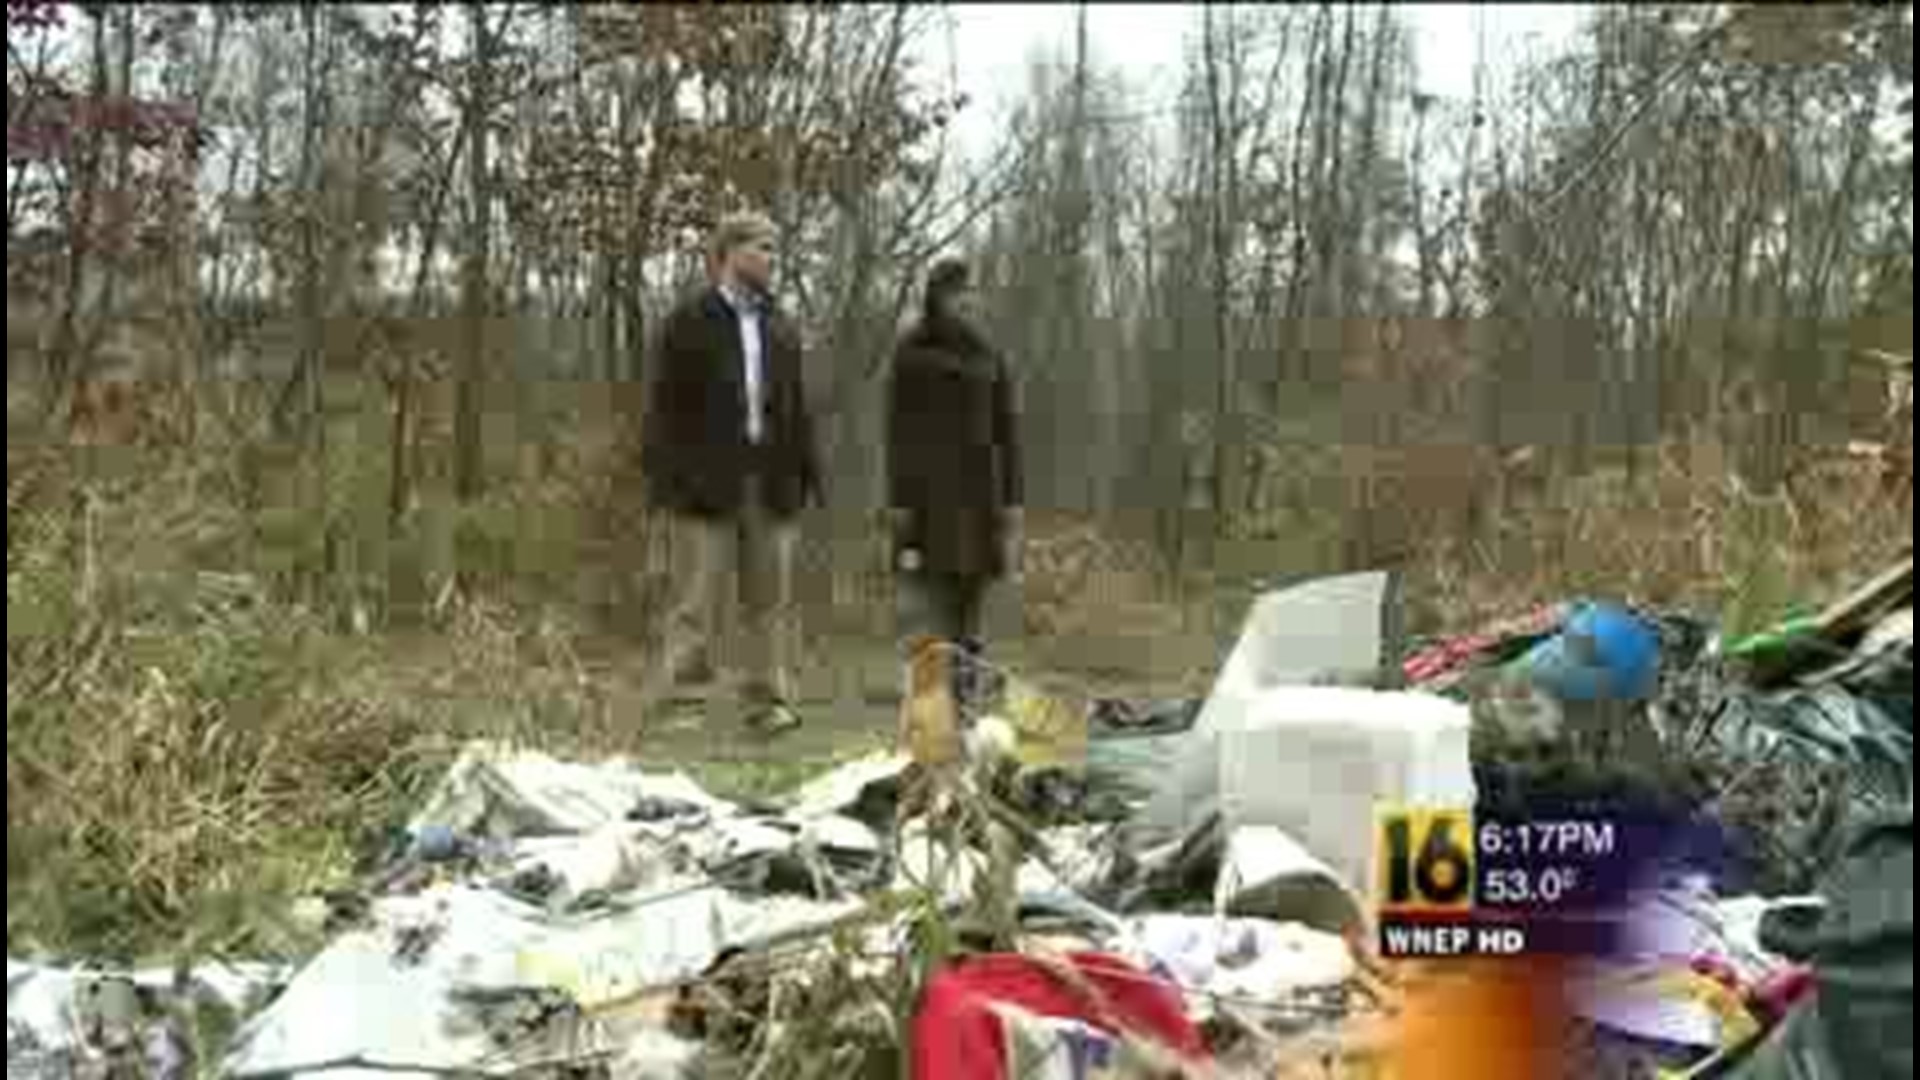 Volunteers Needed to Clean Up Dump Site 11-3-11